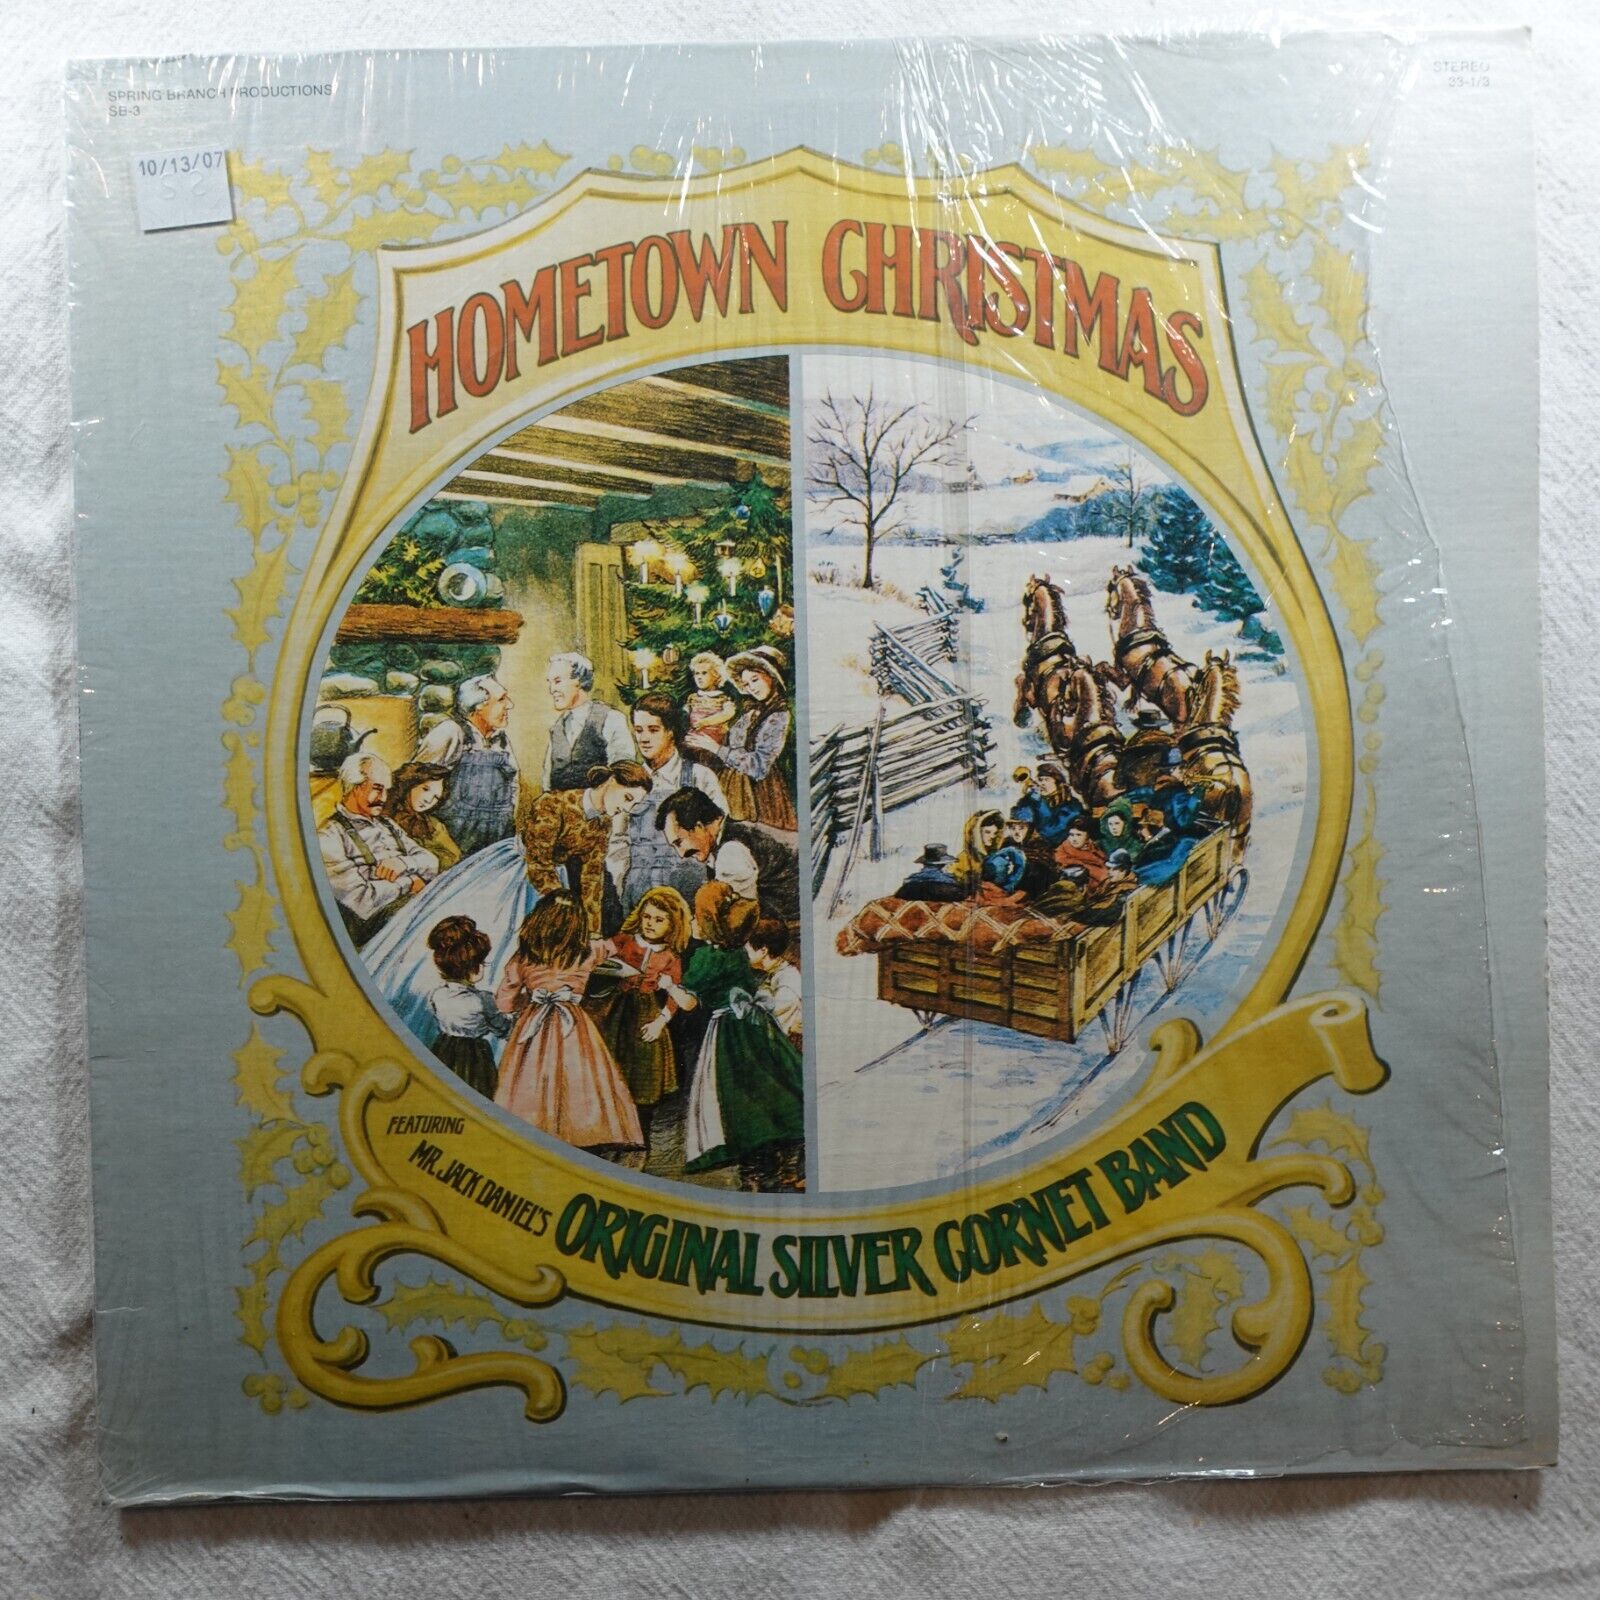 Jack Daniel's Original Silver Cornet Band Hometowm Christmas   Record Album LP